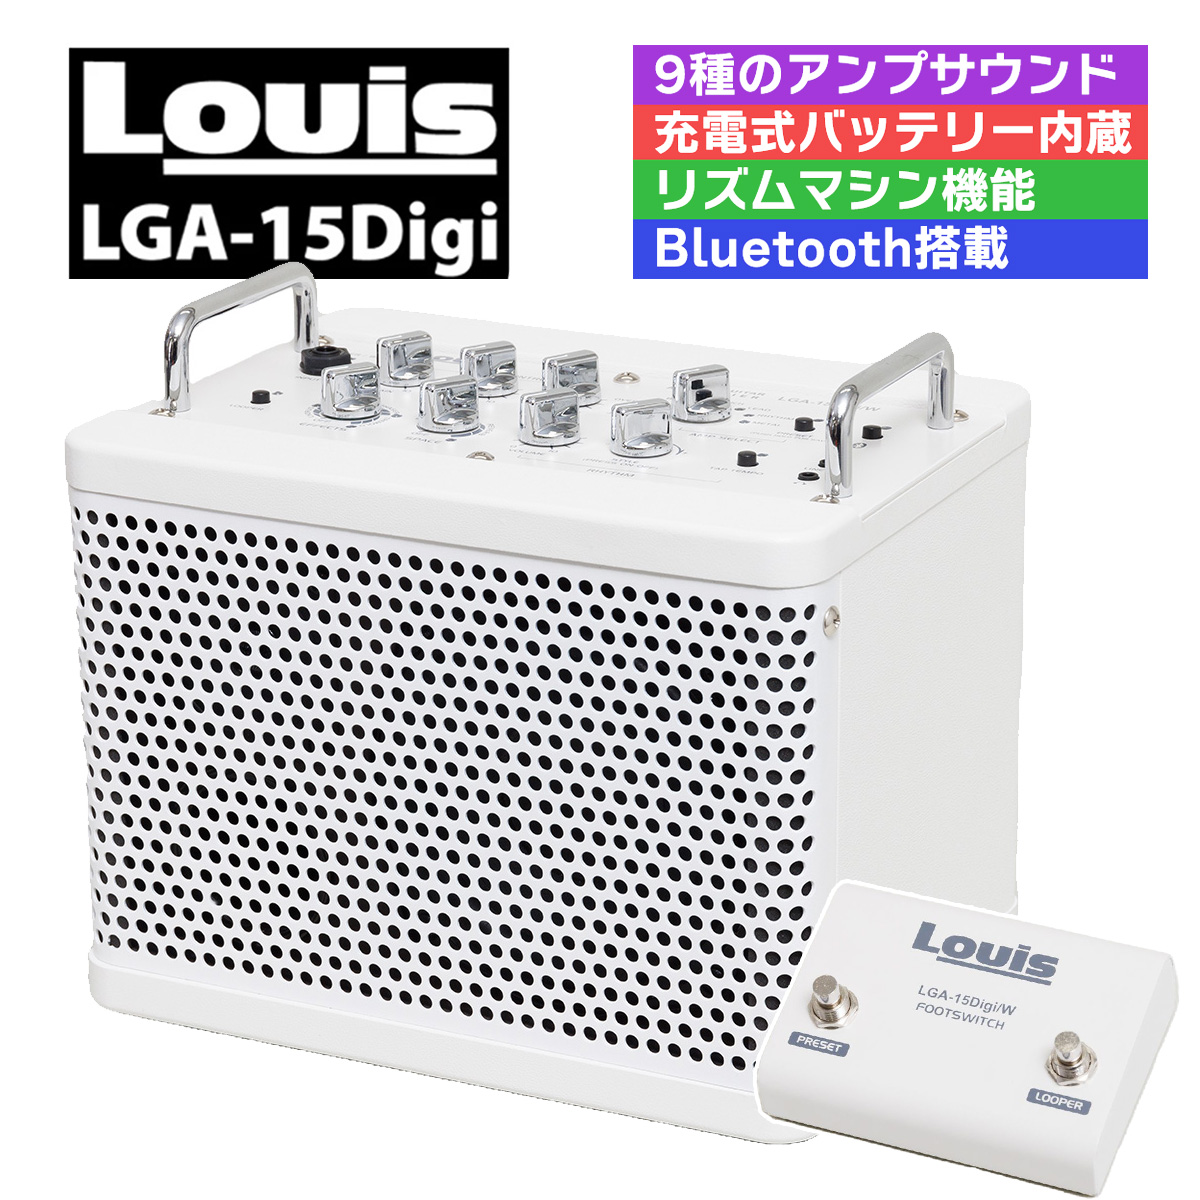 Louis Lewis LGA-15Digi/W guitar amplifier white Bluetooth* rhythm machine * LOOPER installing charge 4 hour drive battery built-in 